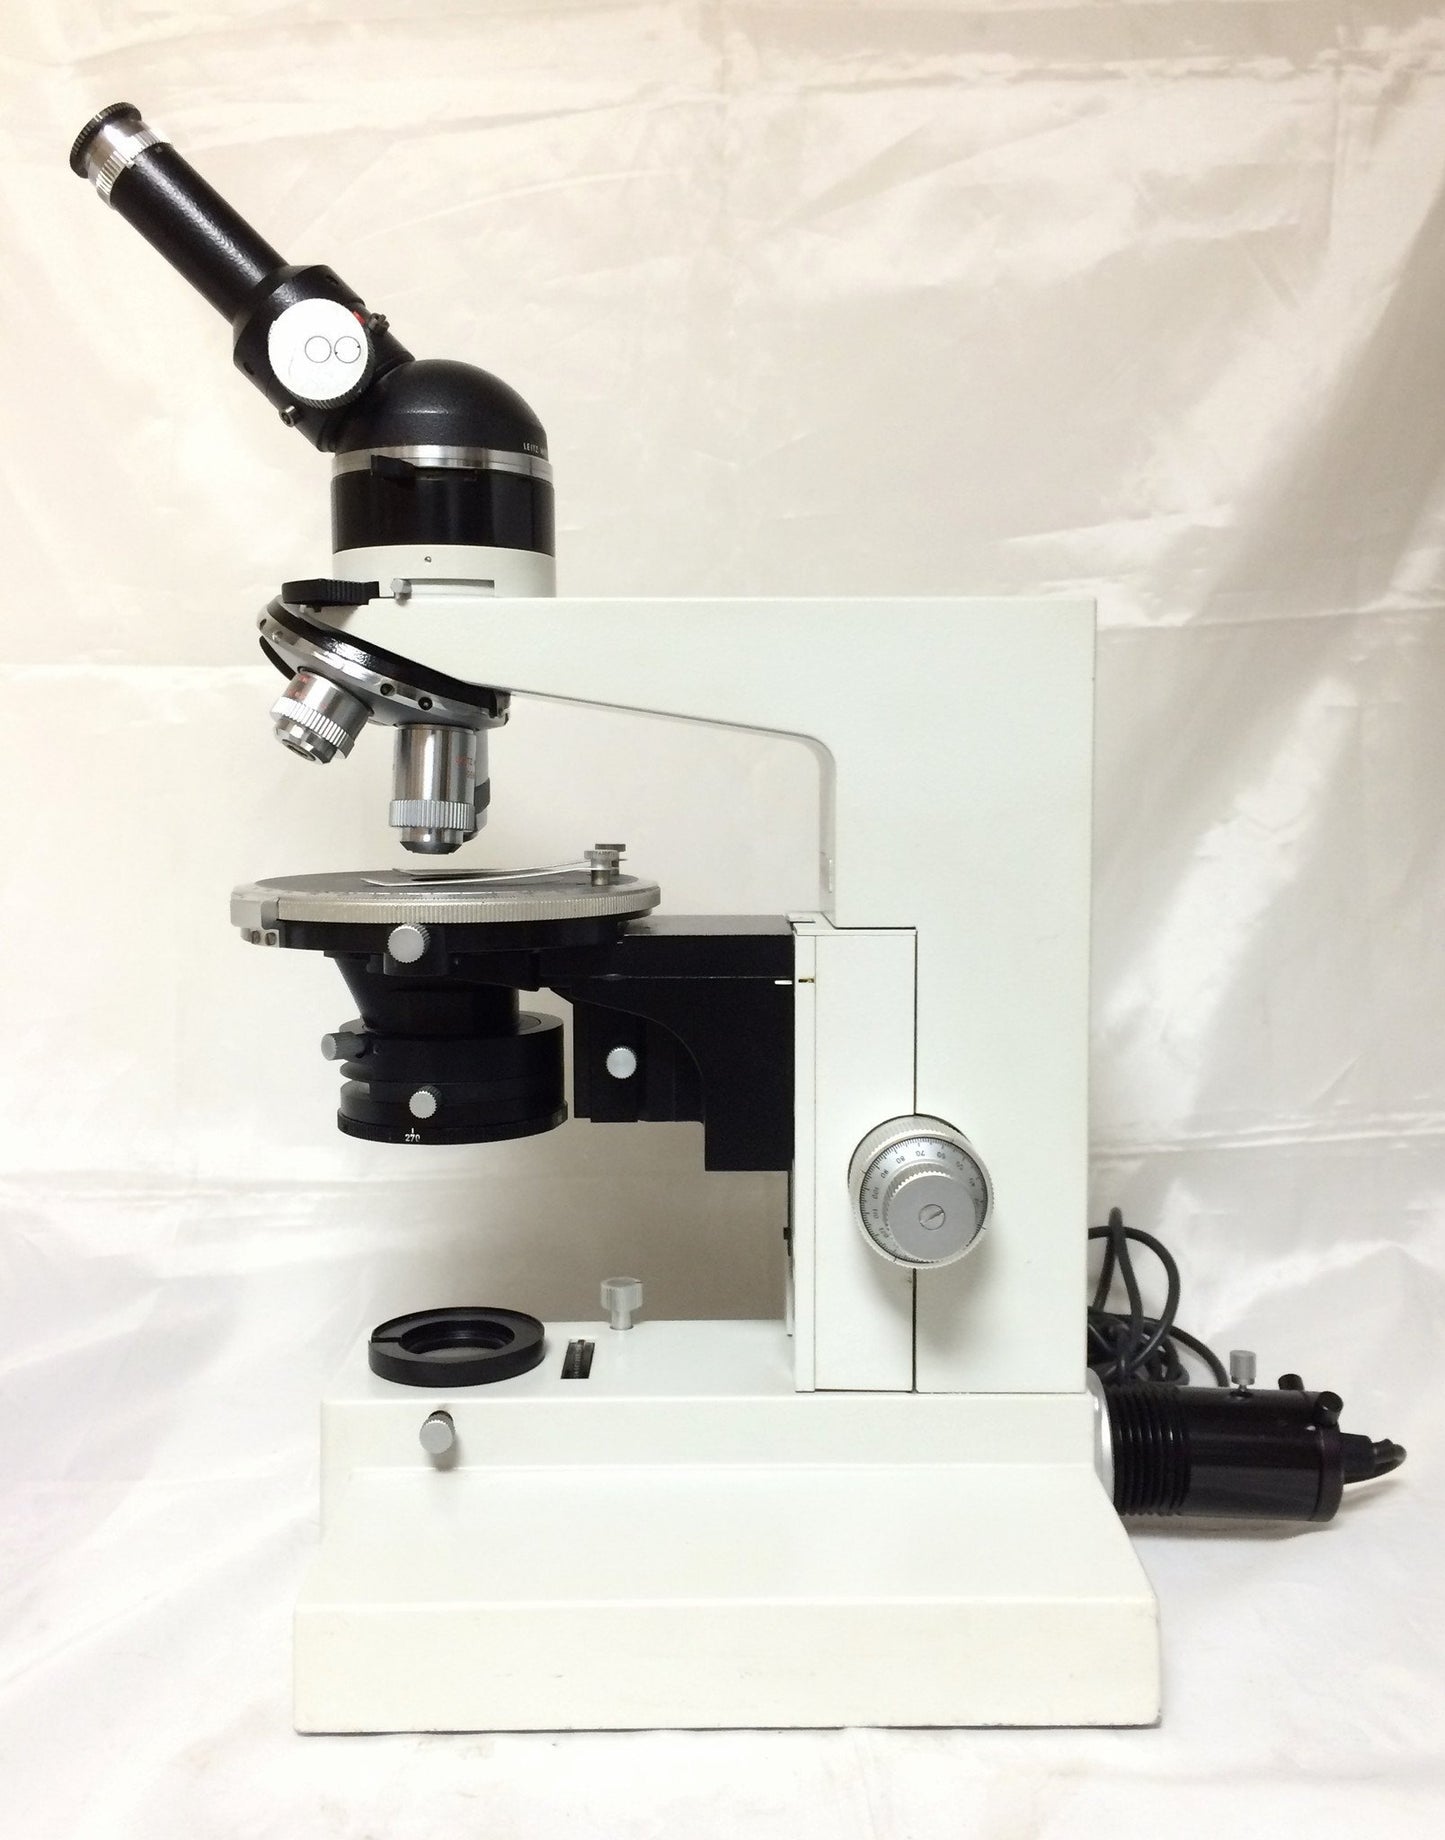 Leitz SM-LUX-POL Polarizing Microscope Refurbished - Microscope Central
 - 3